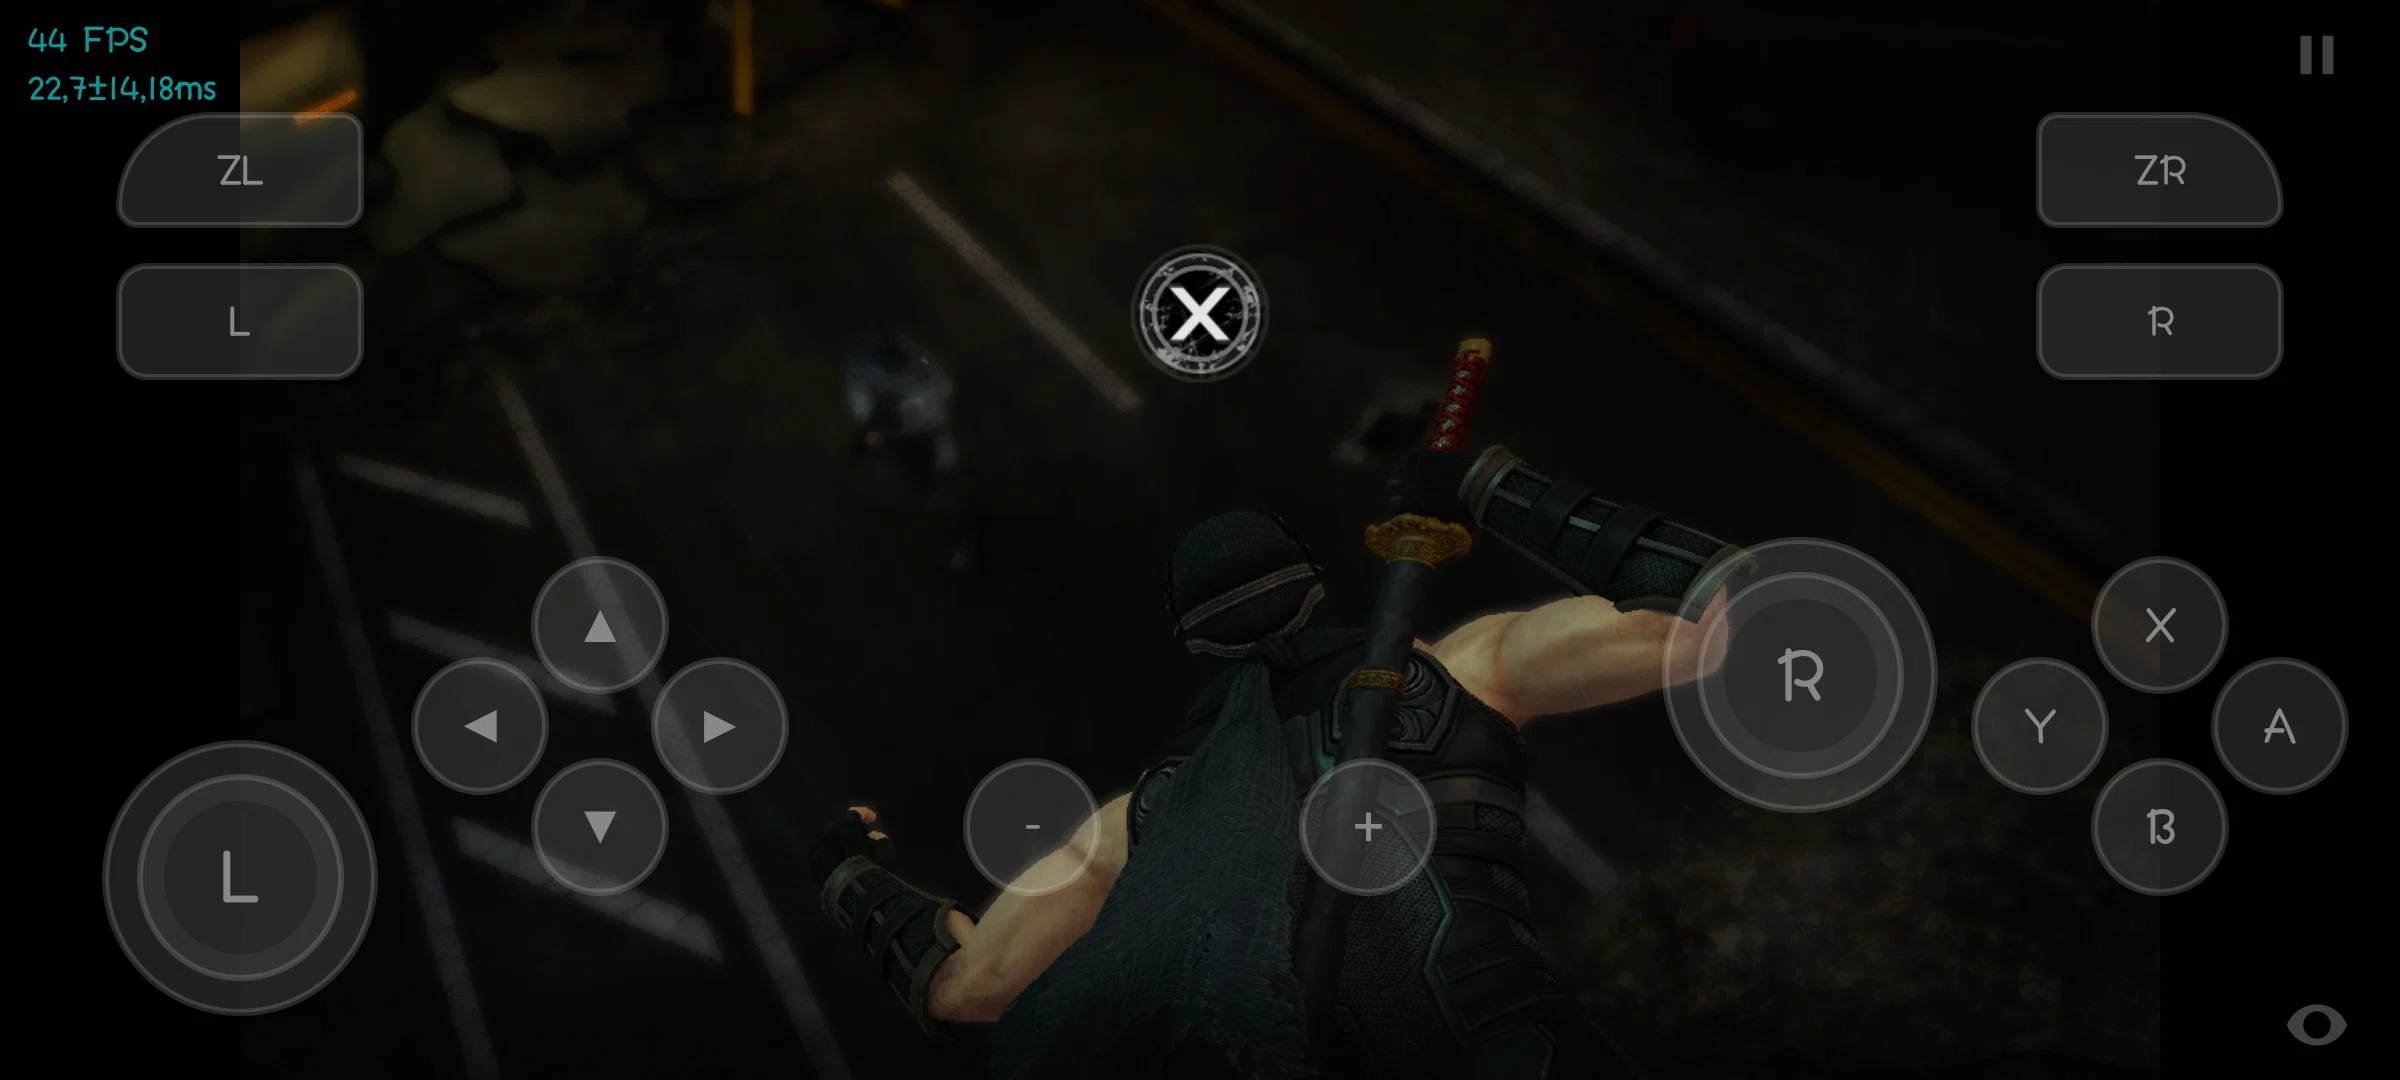 Ninja Gaiden 3 Razors Edge Android APK OBB Download - Skyline Edge Emulator